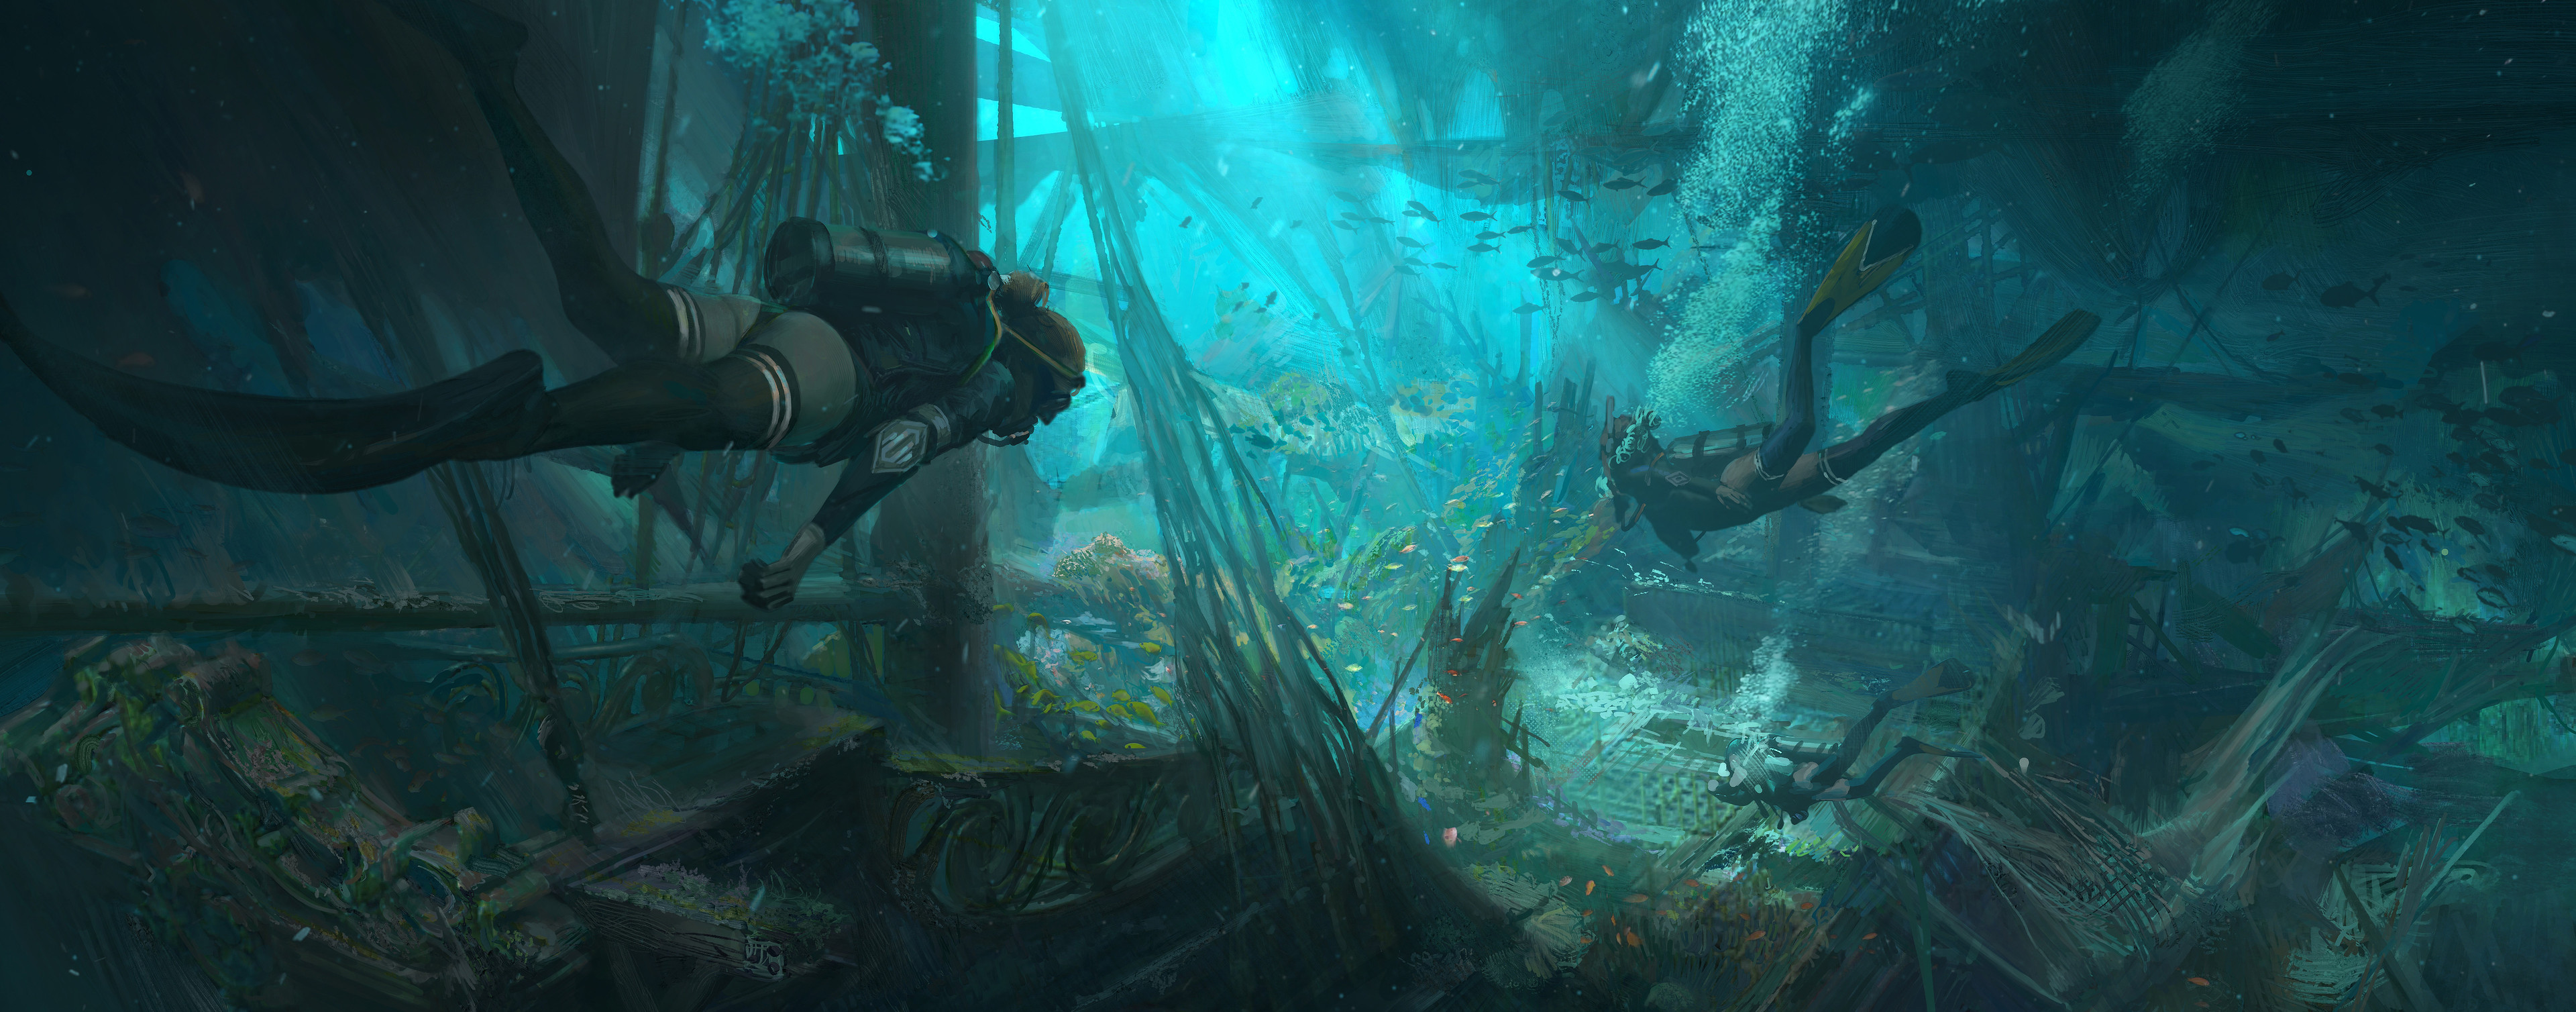 Digital Art Artwork Illustration Drawing Underwater Scuba Diving Environment Ruins Ship Fish Animals 3840x1508